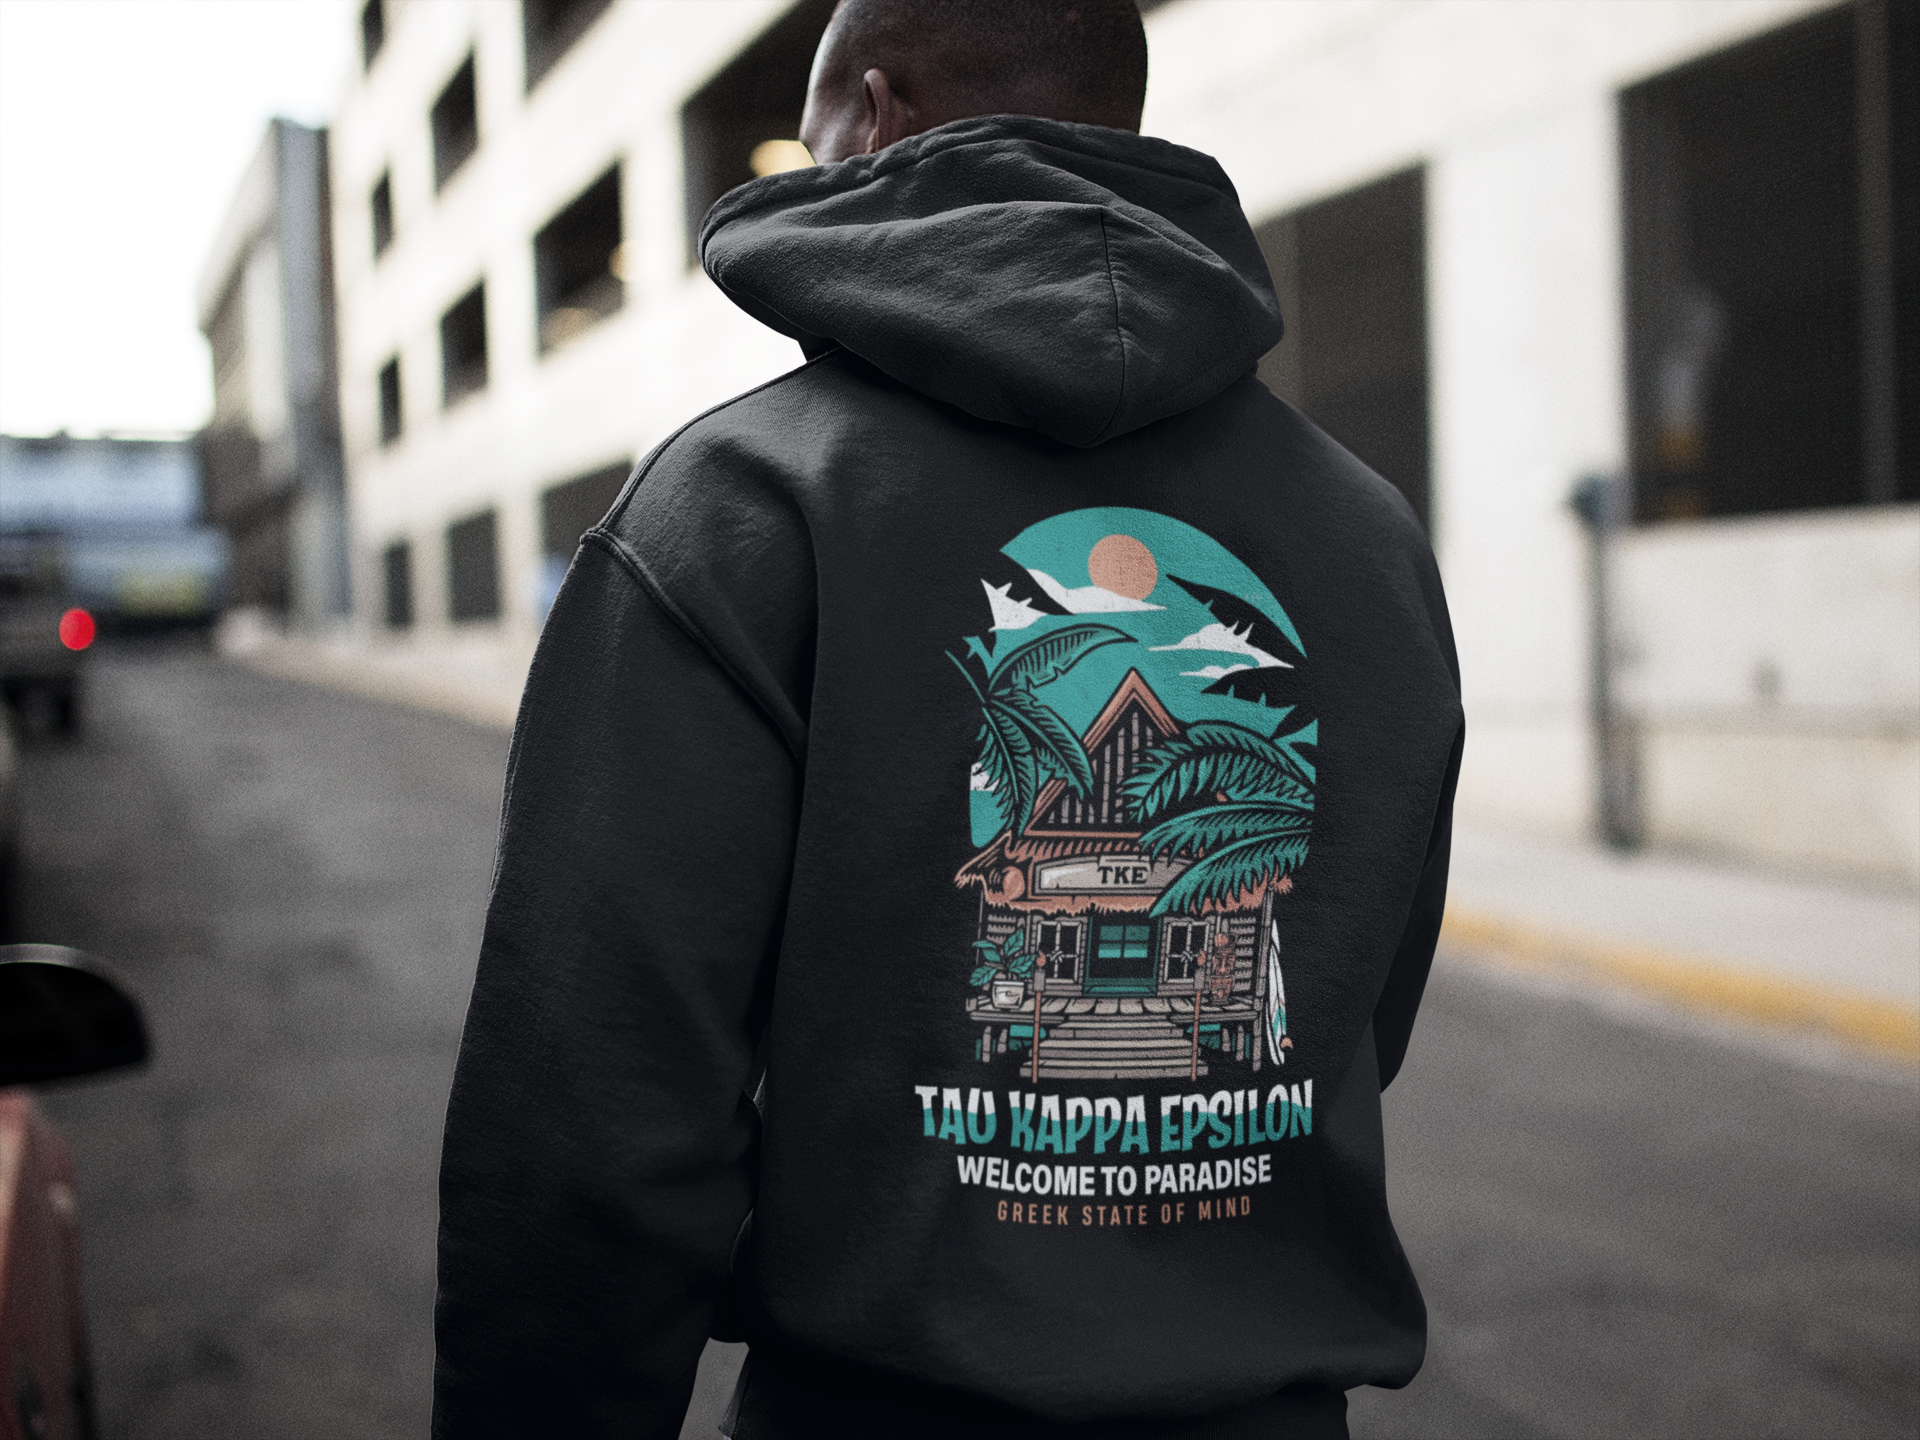 Tau Kappa Epsilon Graphic Hoodie | Welcome to Paradise | Tau Kappa Epsilon Fraternity back model 